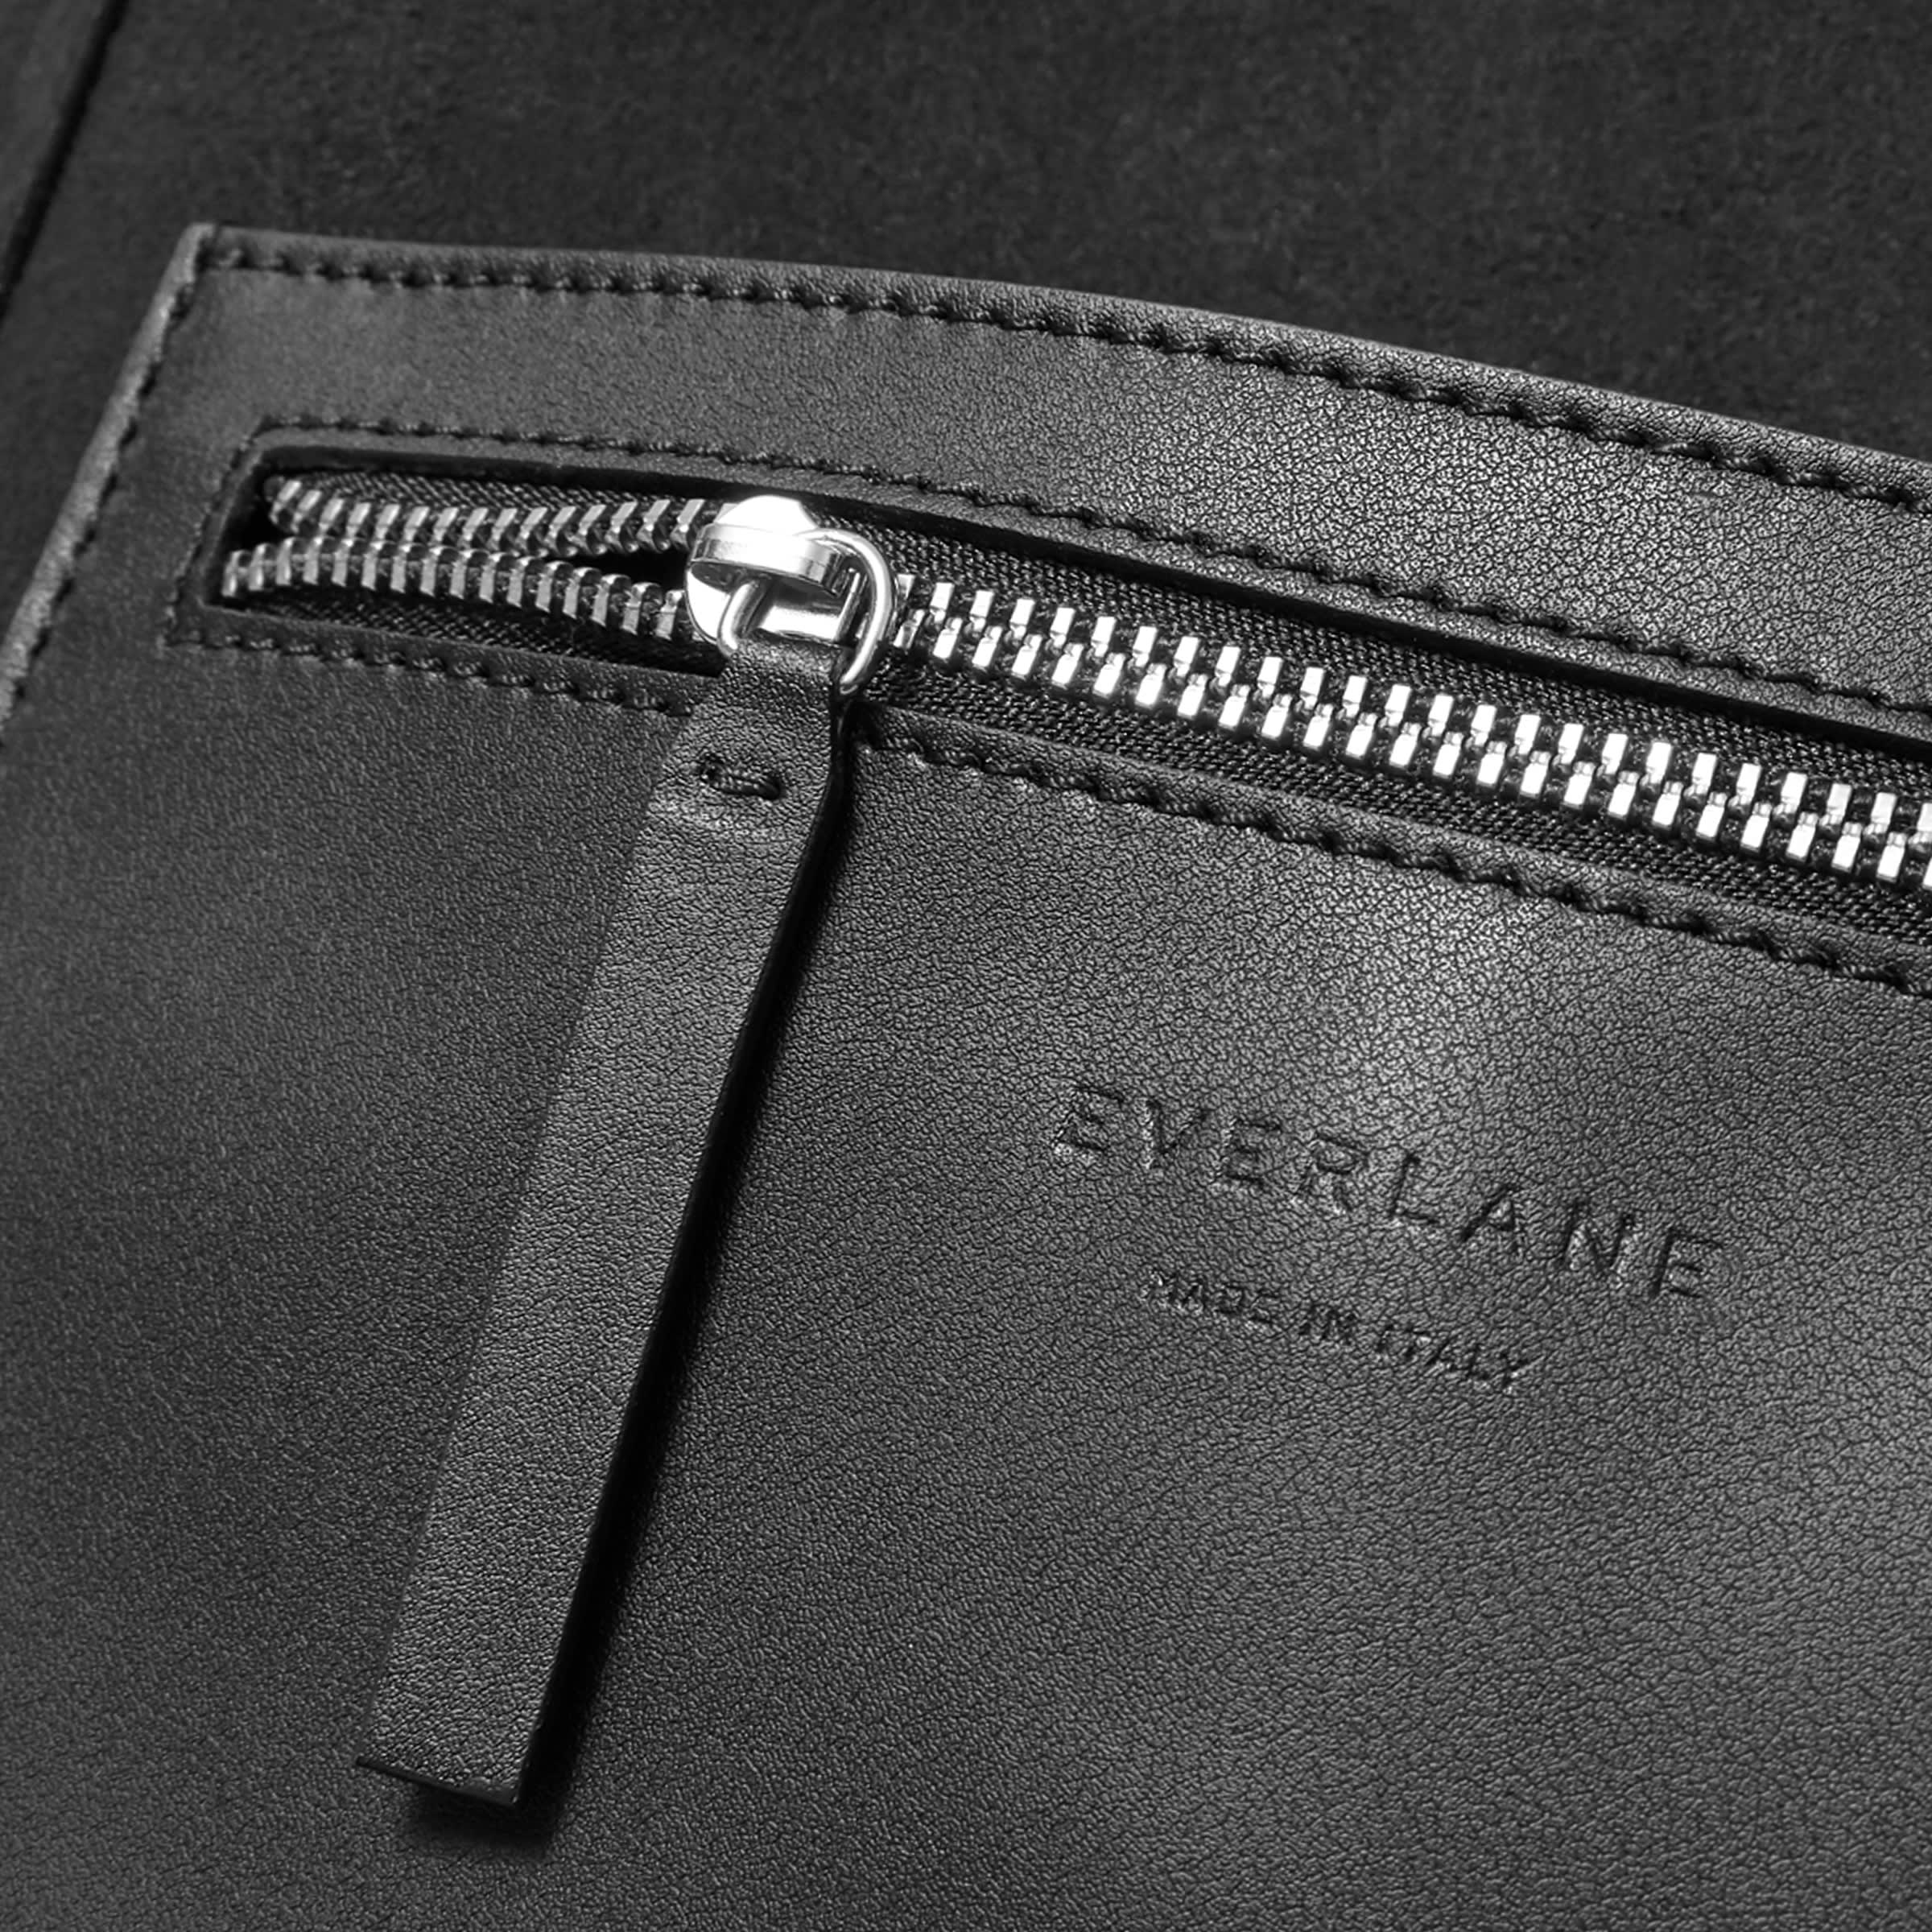 The Studio Bag Black – Everlane